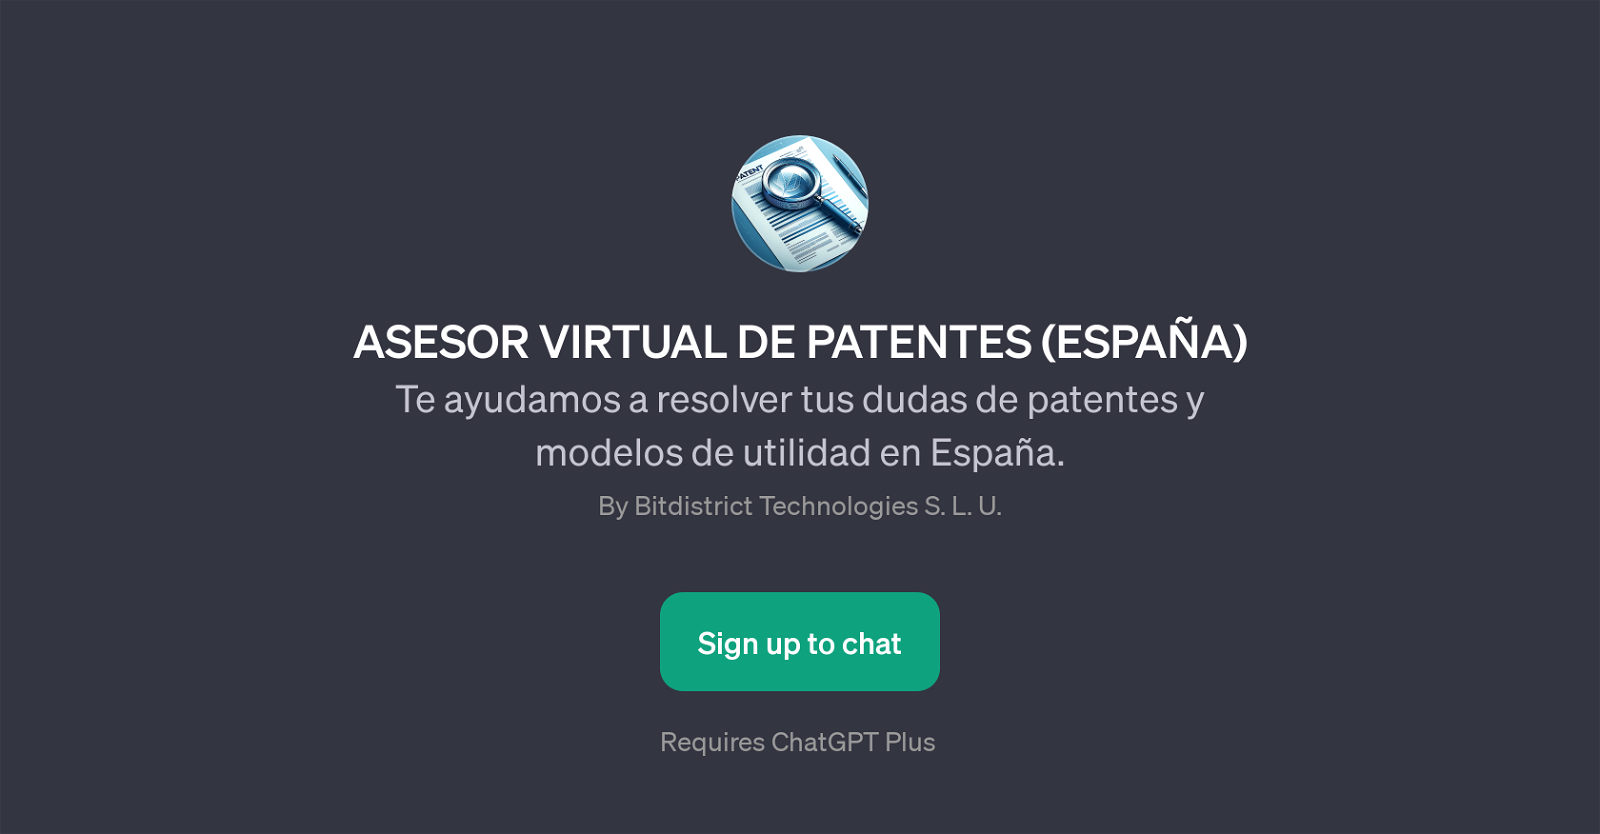 ASESOR VIRTUAL DE PATENTES (ESPAA) website